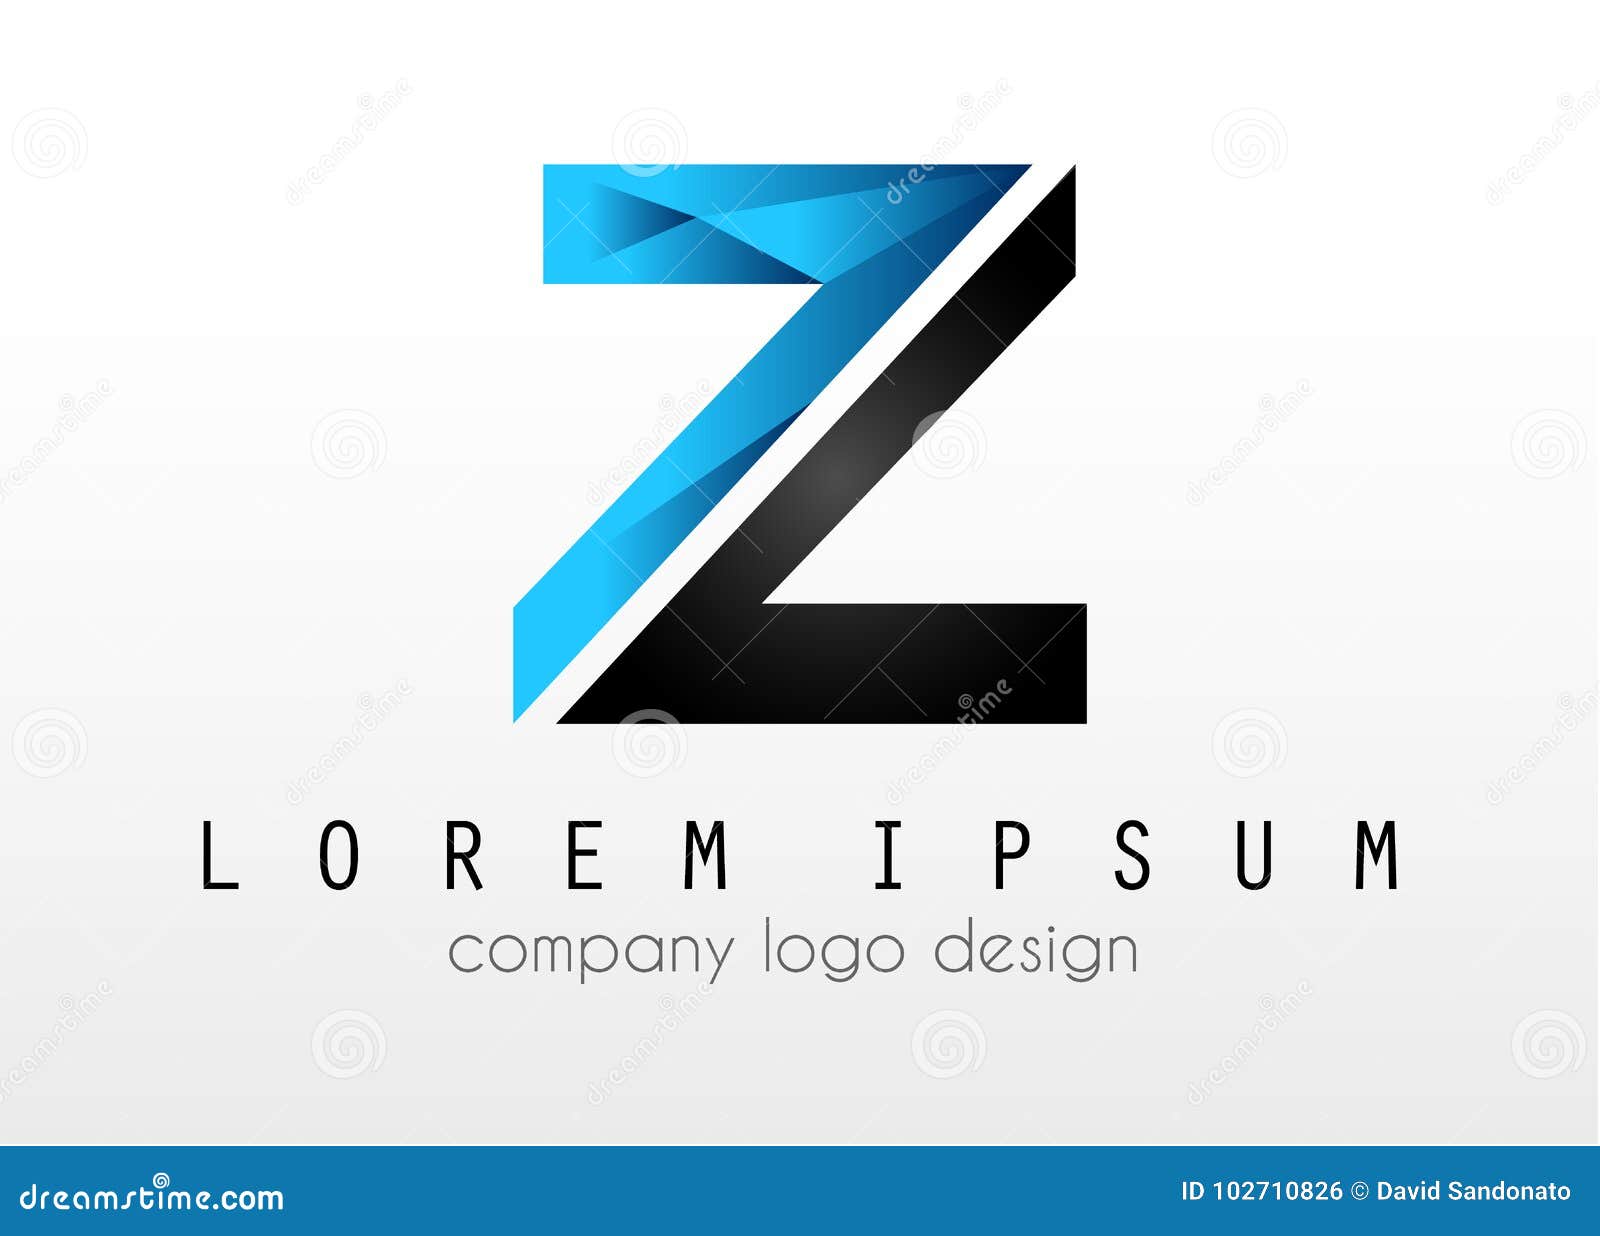 Creative Logo Letter Z Design For Brand Identity Company Profile Or Corporate Logos Stock Vector Illustration Of Elegant Head